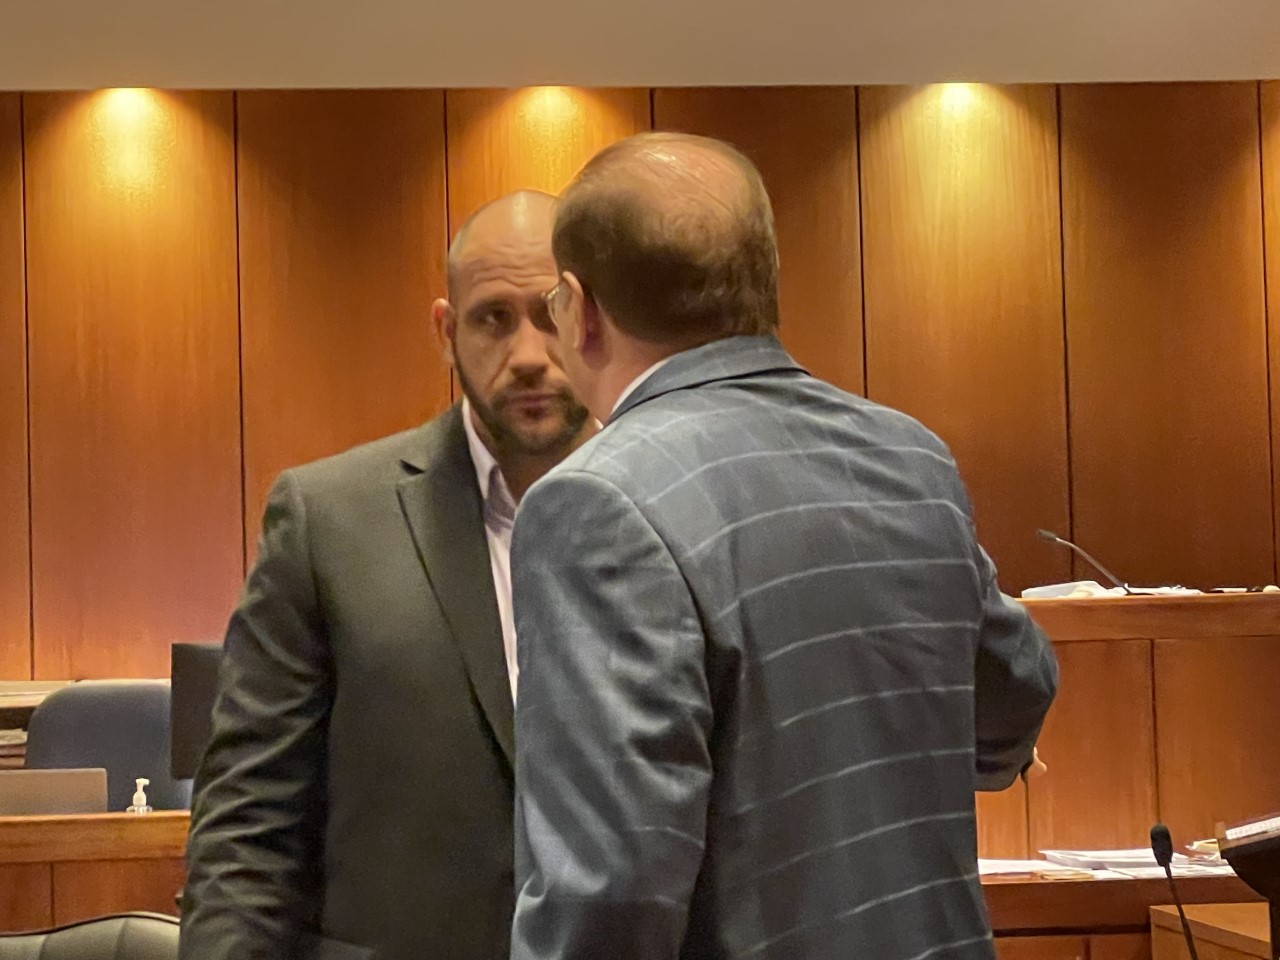 Update: Jury begins deliberations in Chambers murder trial